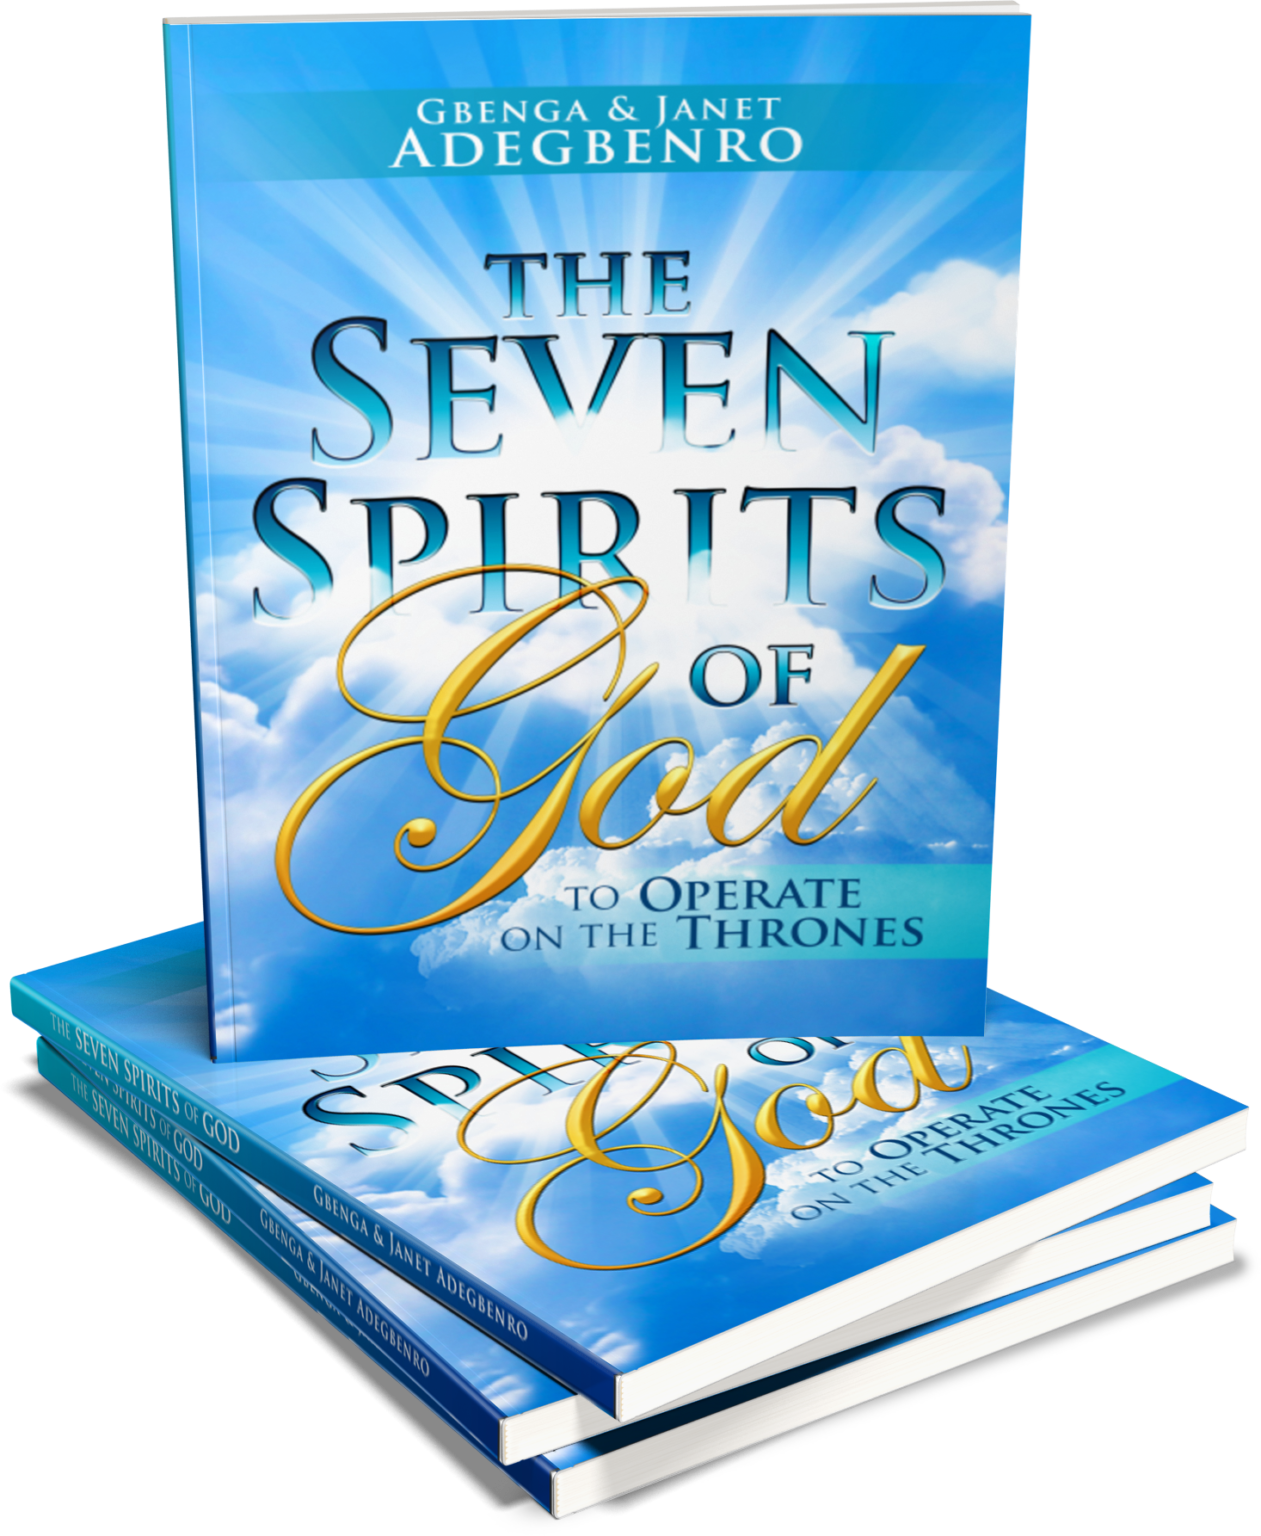 seven spirits of god